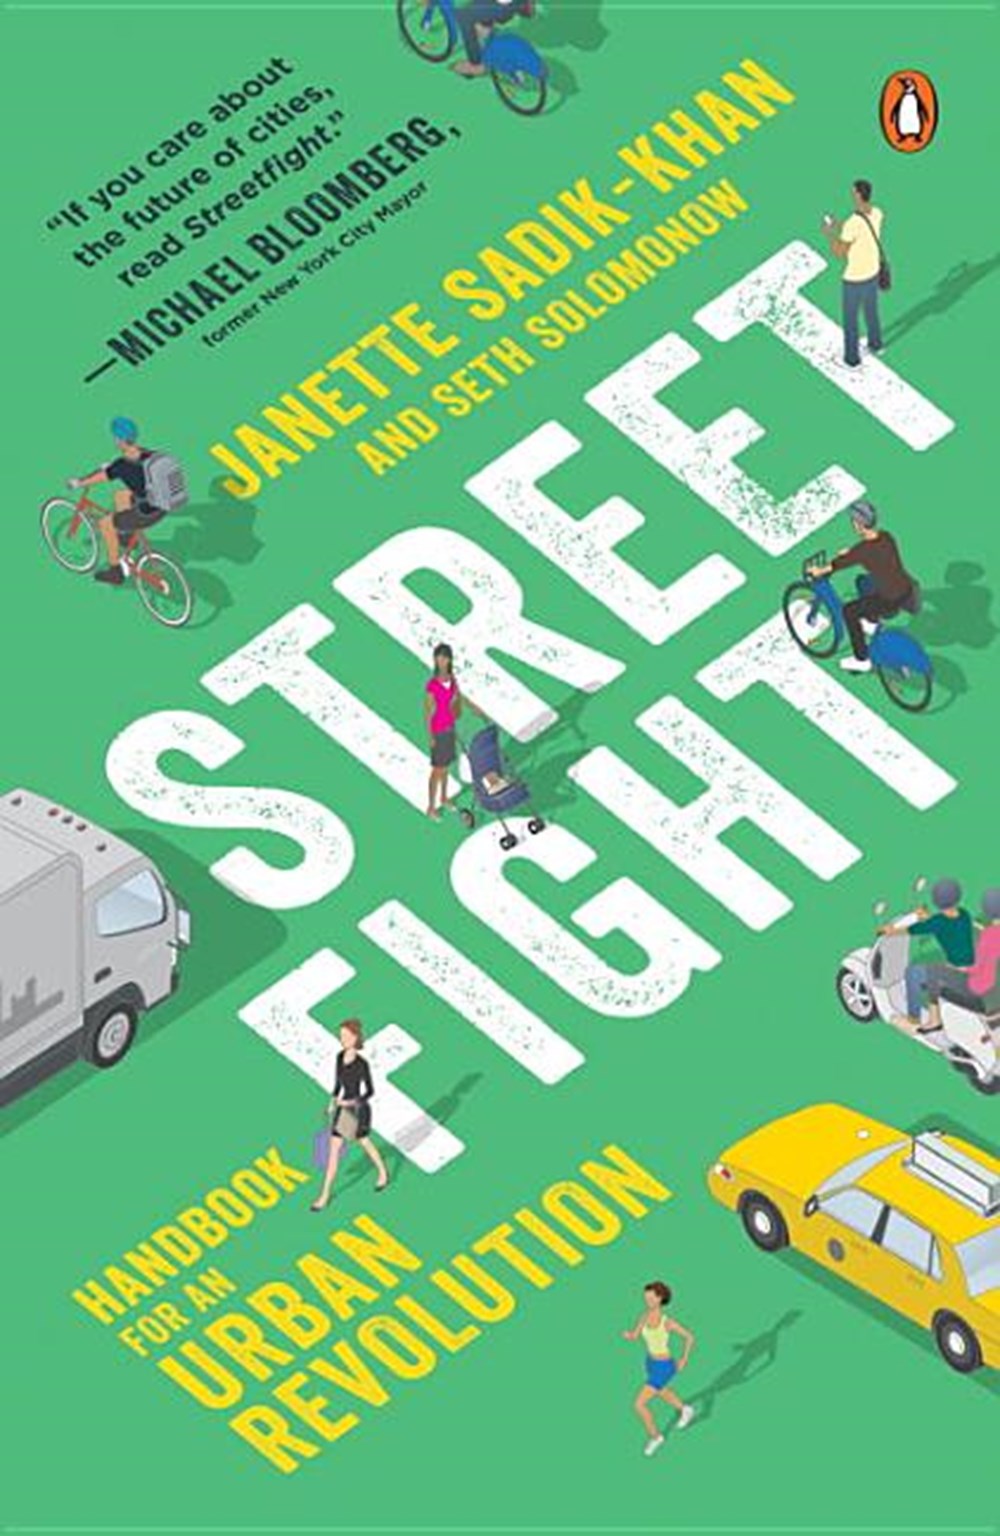 Streetfight Handbook for an Urban Revolution